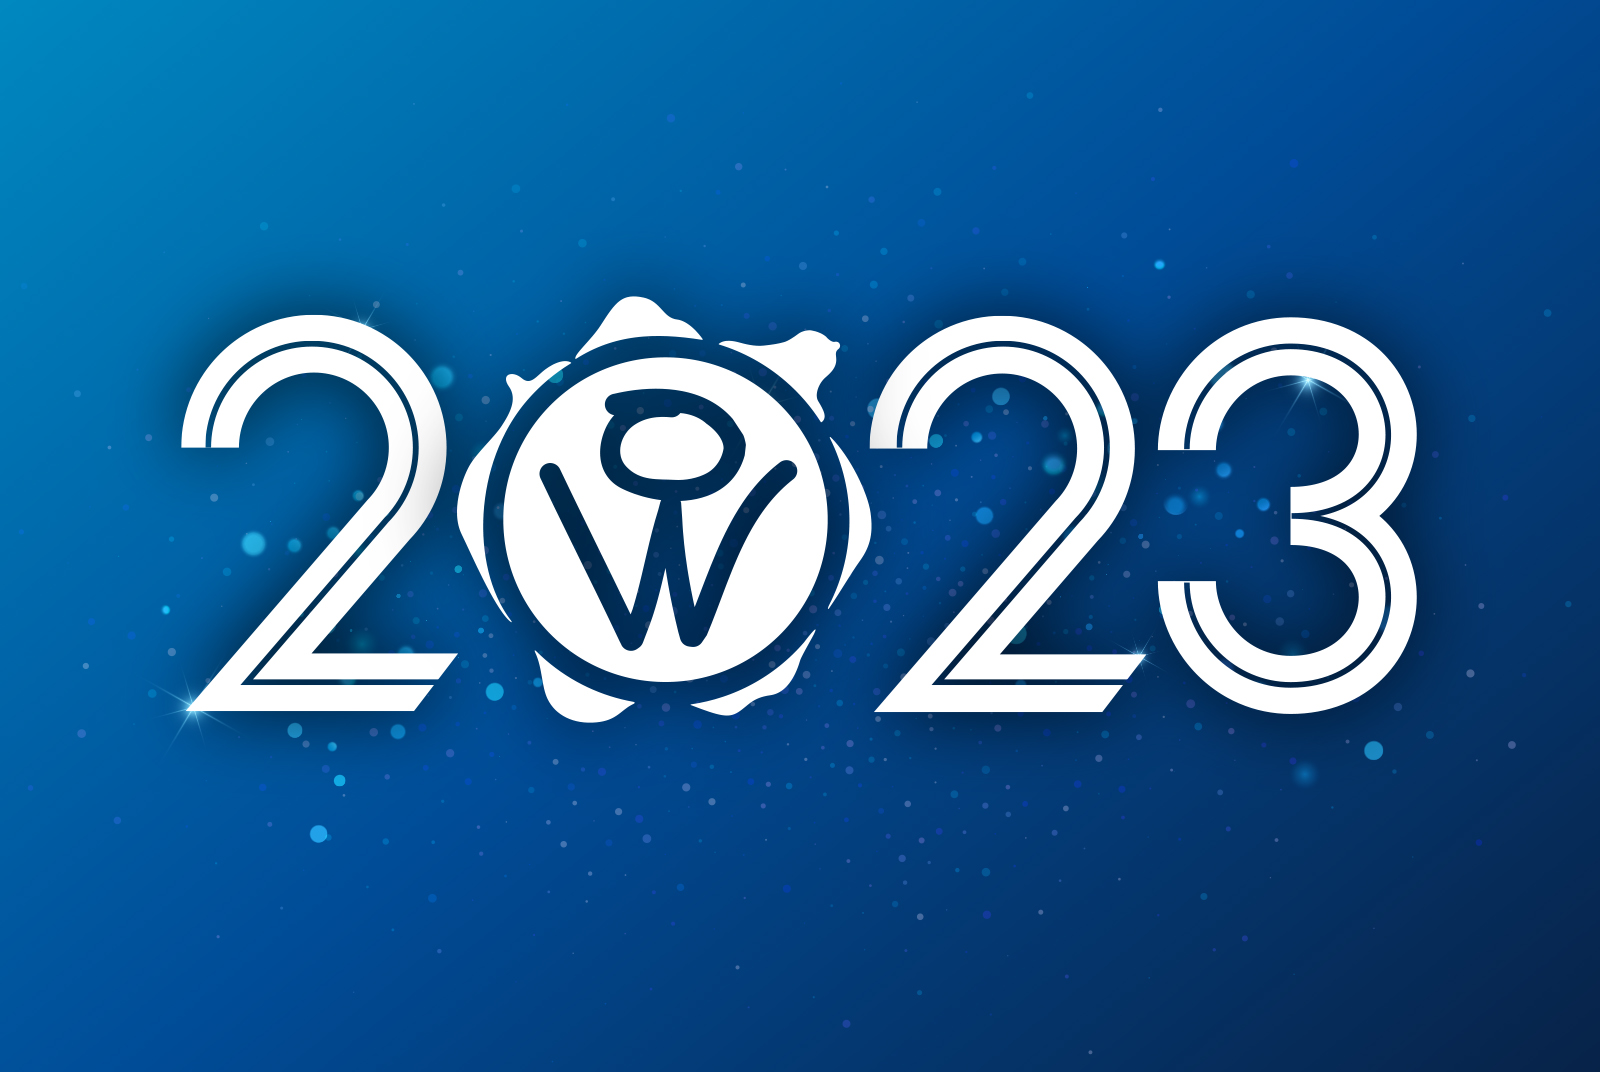 2022 - It’s a Wrap!